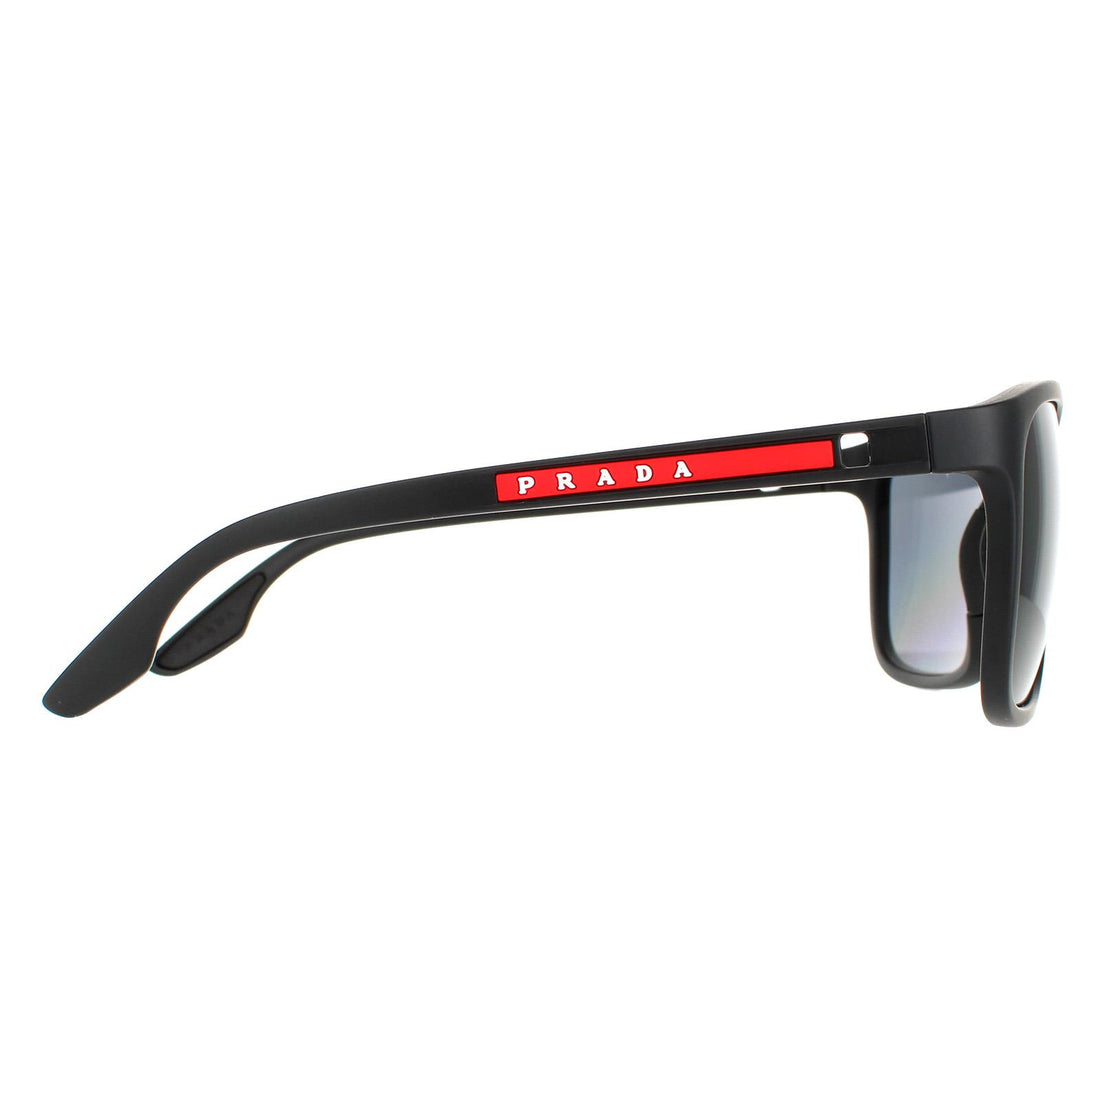 Prada Sport Sunglasses PS02WS DG002G Black Rubber Dark Grey Polarized